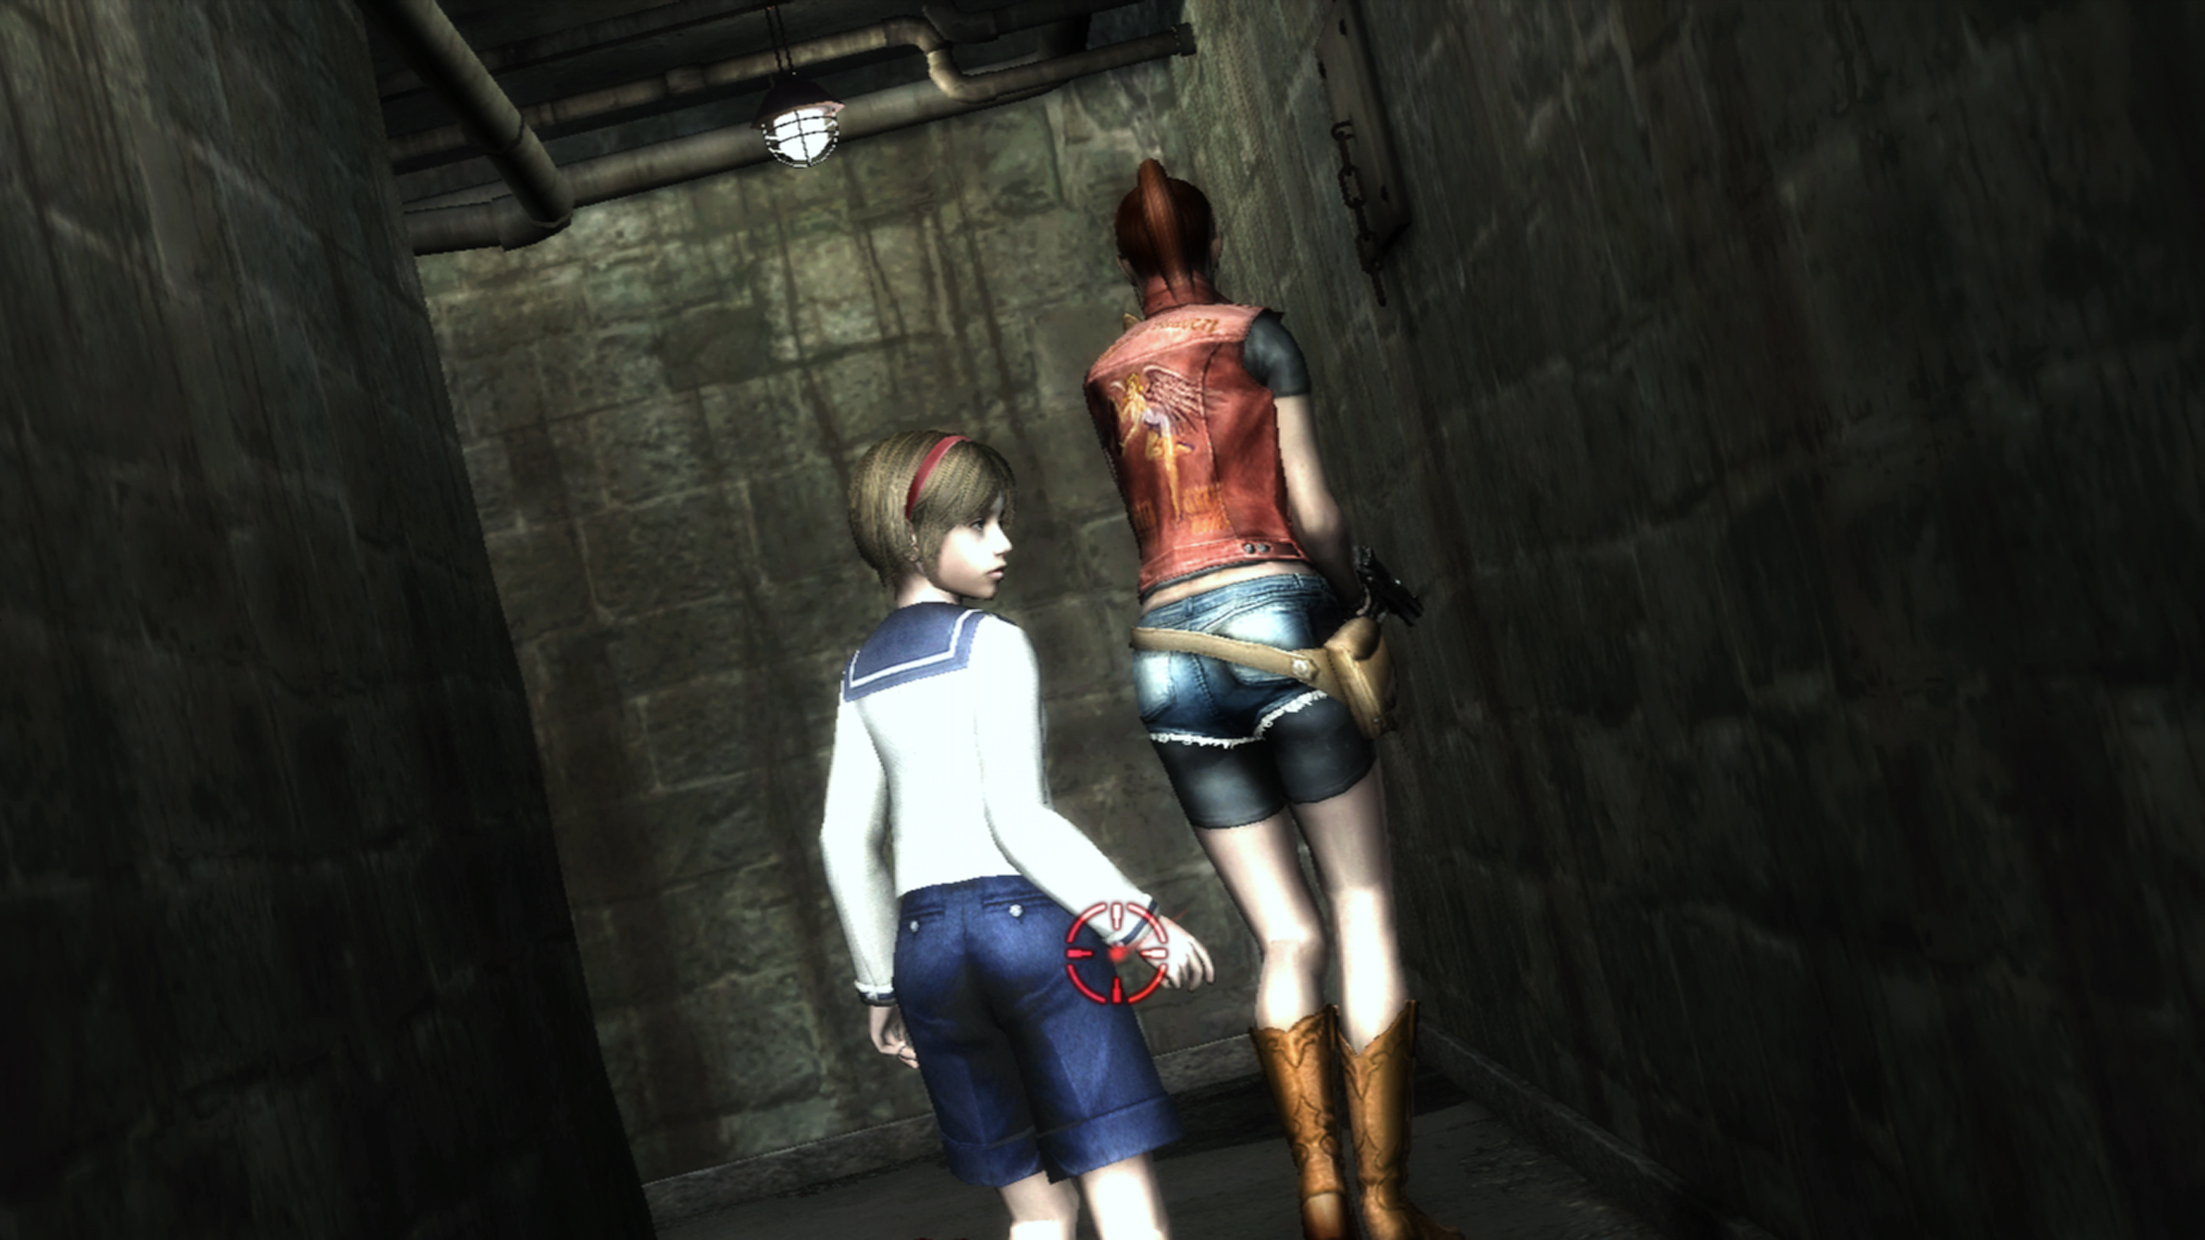 Resident Evil: The Darkside Chronicles HD wallpapers, Desktop wallpaper - most viewed